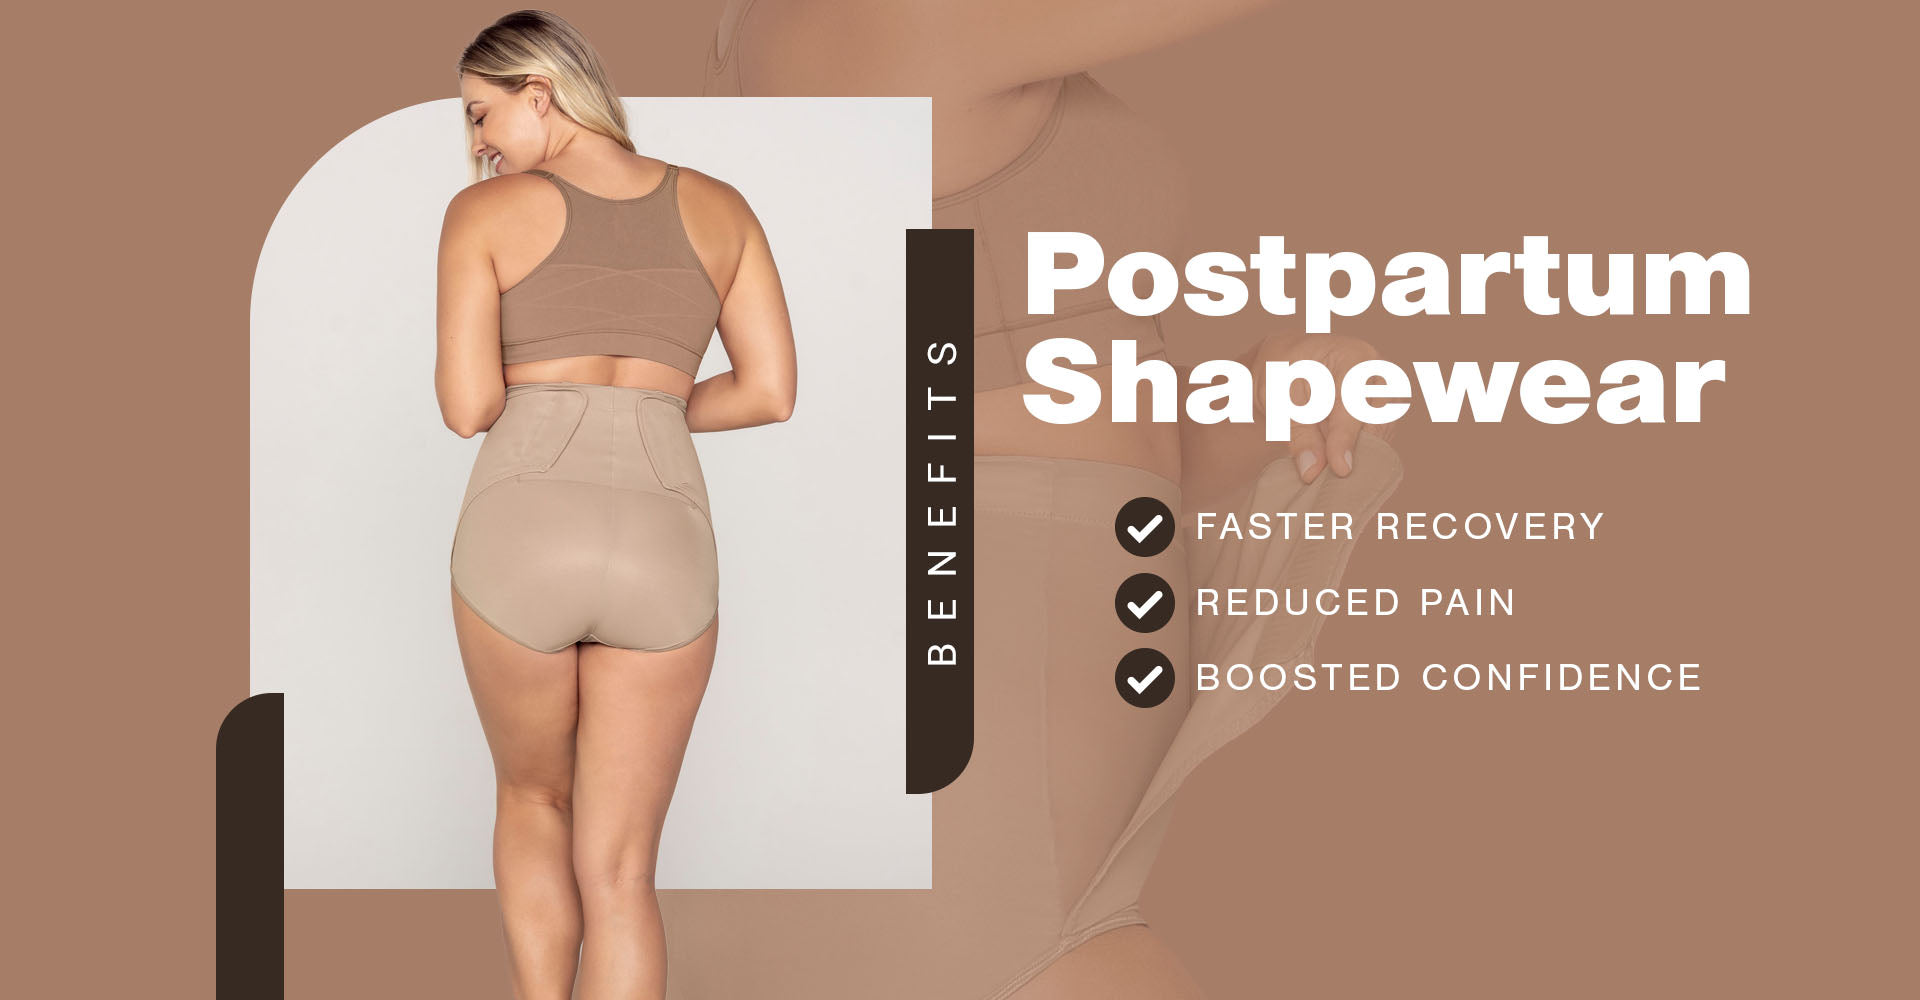 Benefits of Postpartum Shapewear 